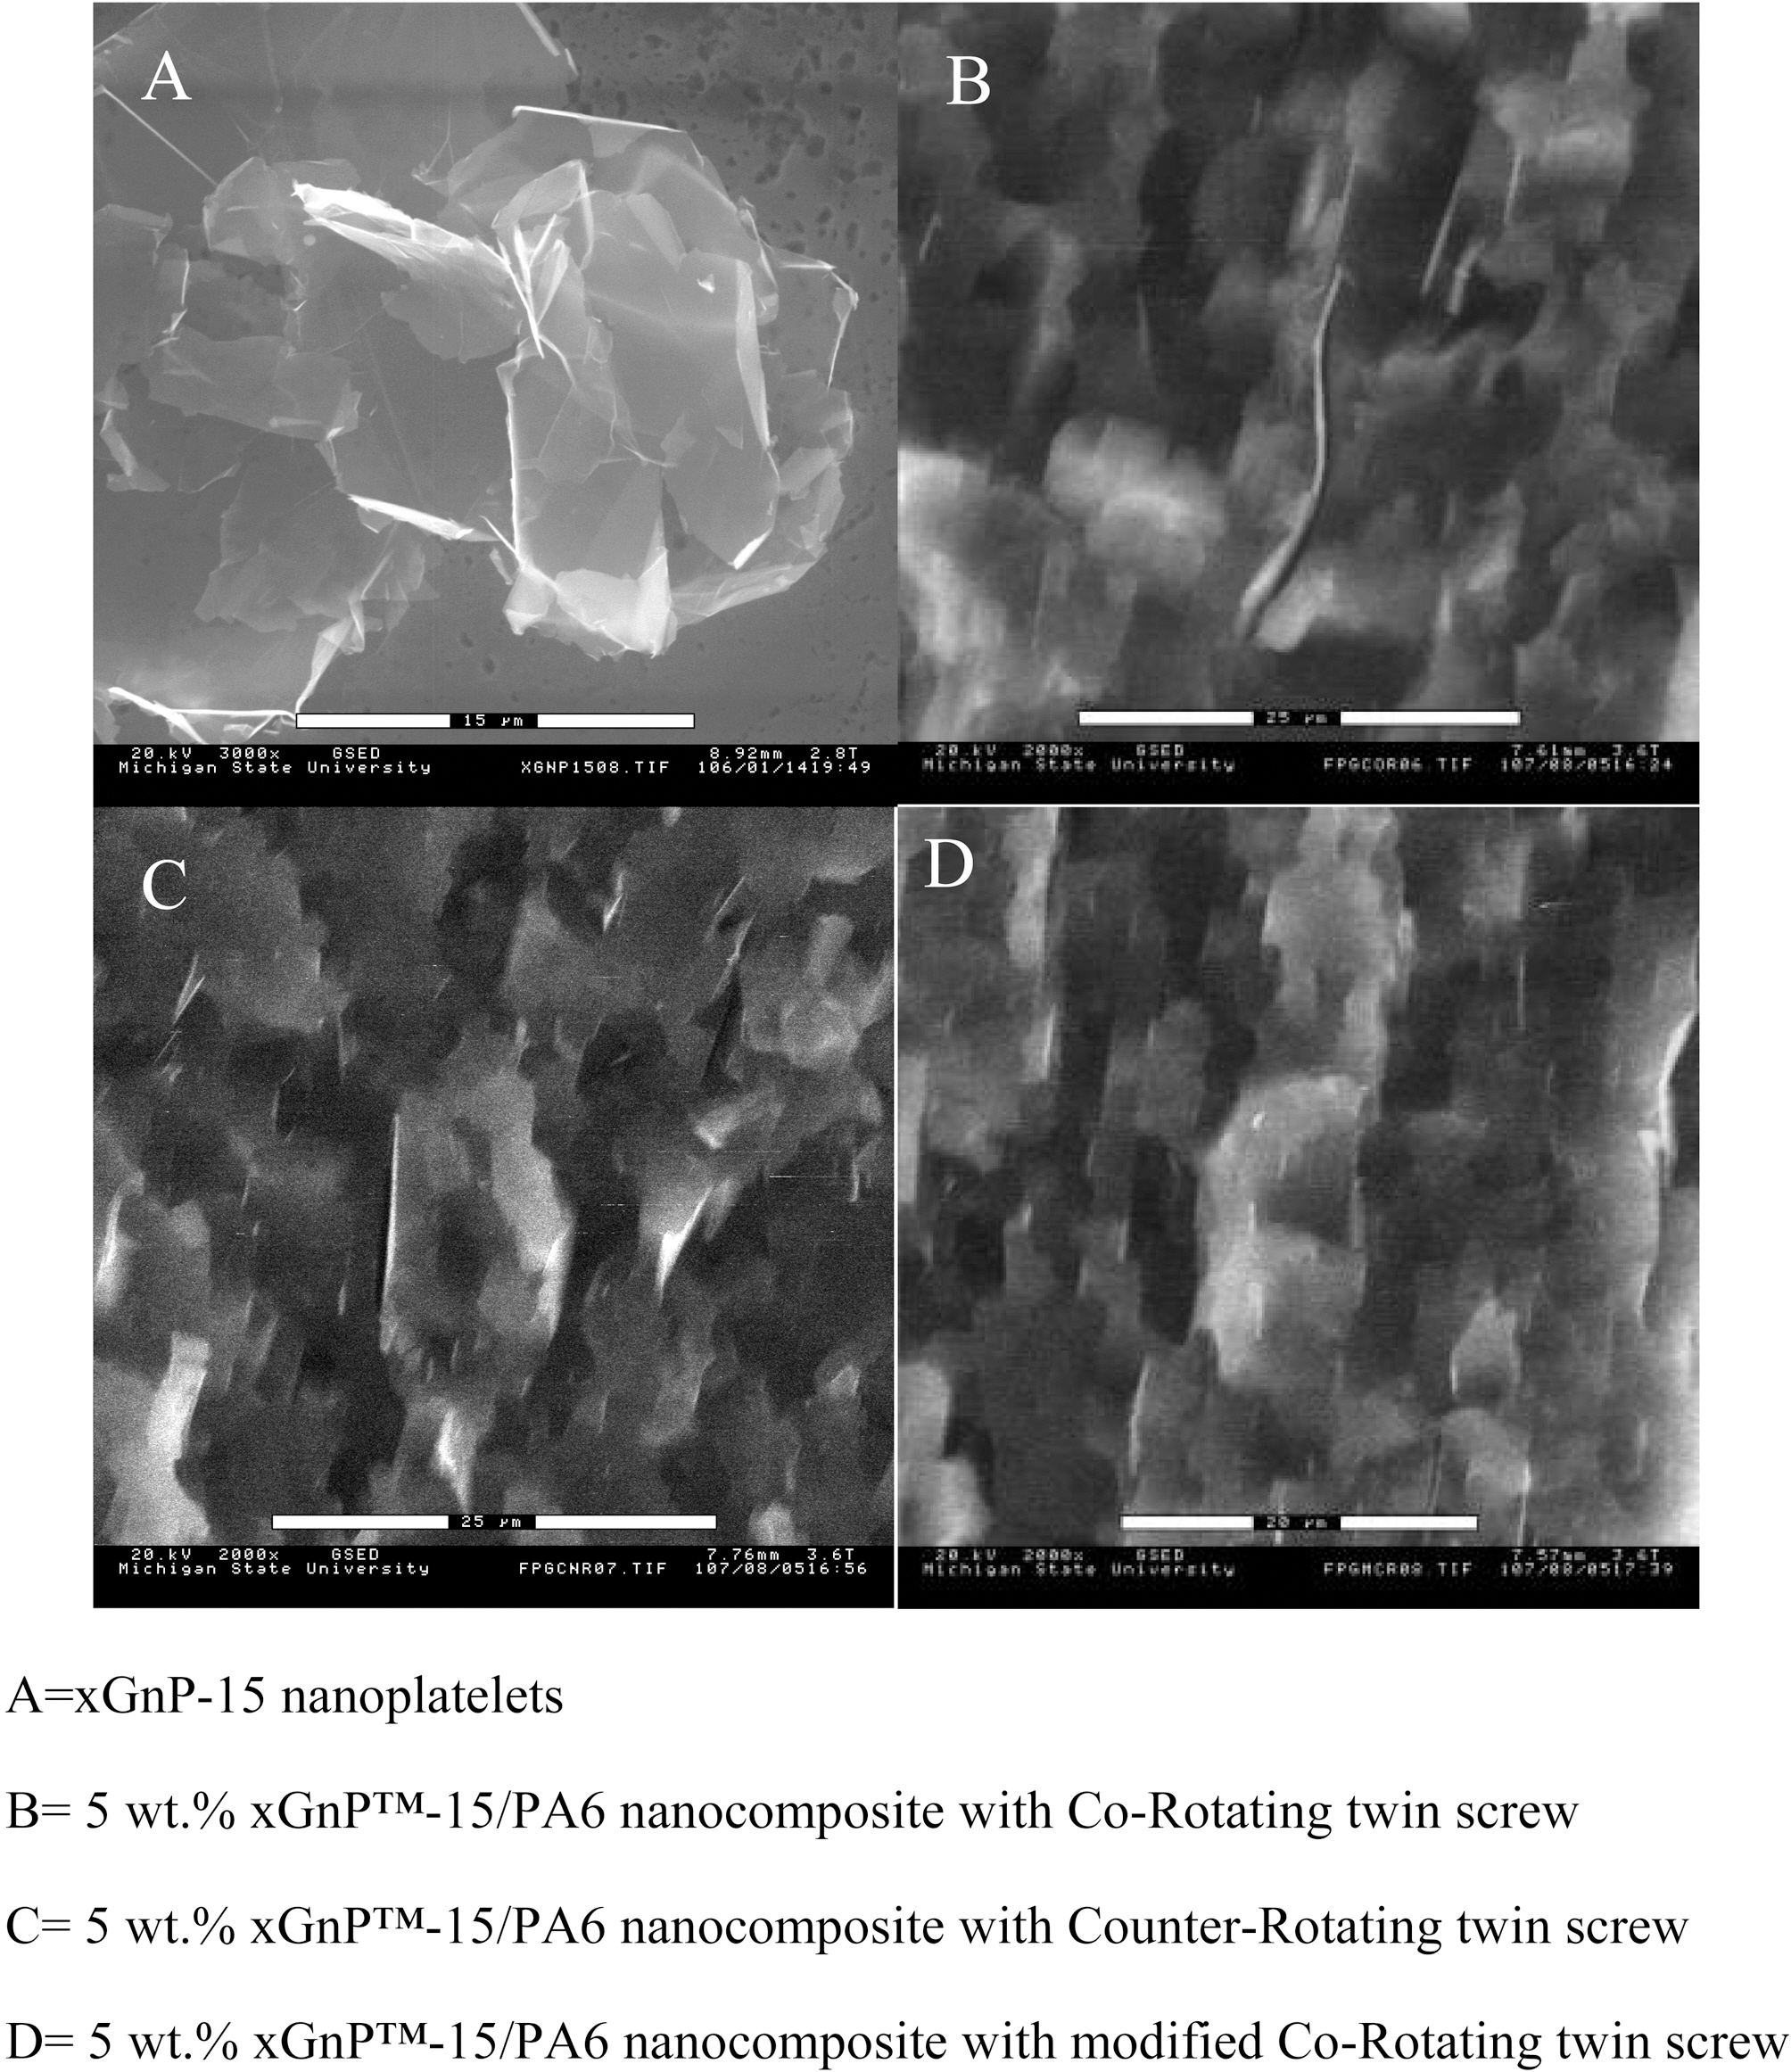 ESEM morphology of 5 wt.% xGnP-15 reinforced PA6 nanocomposite.